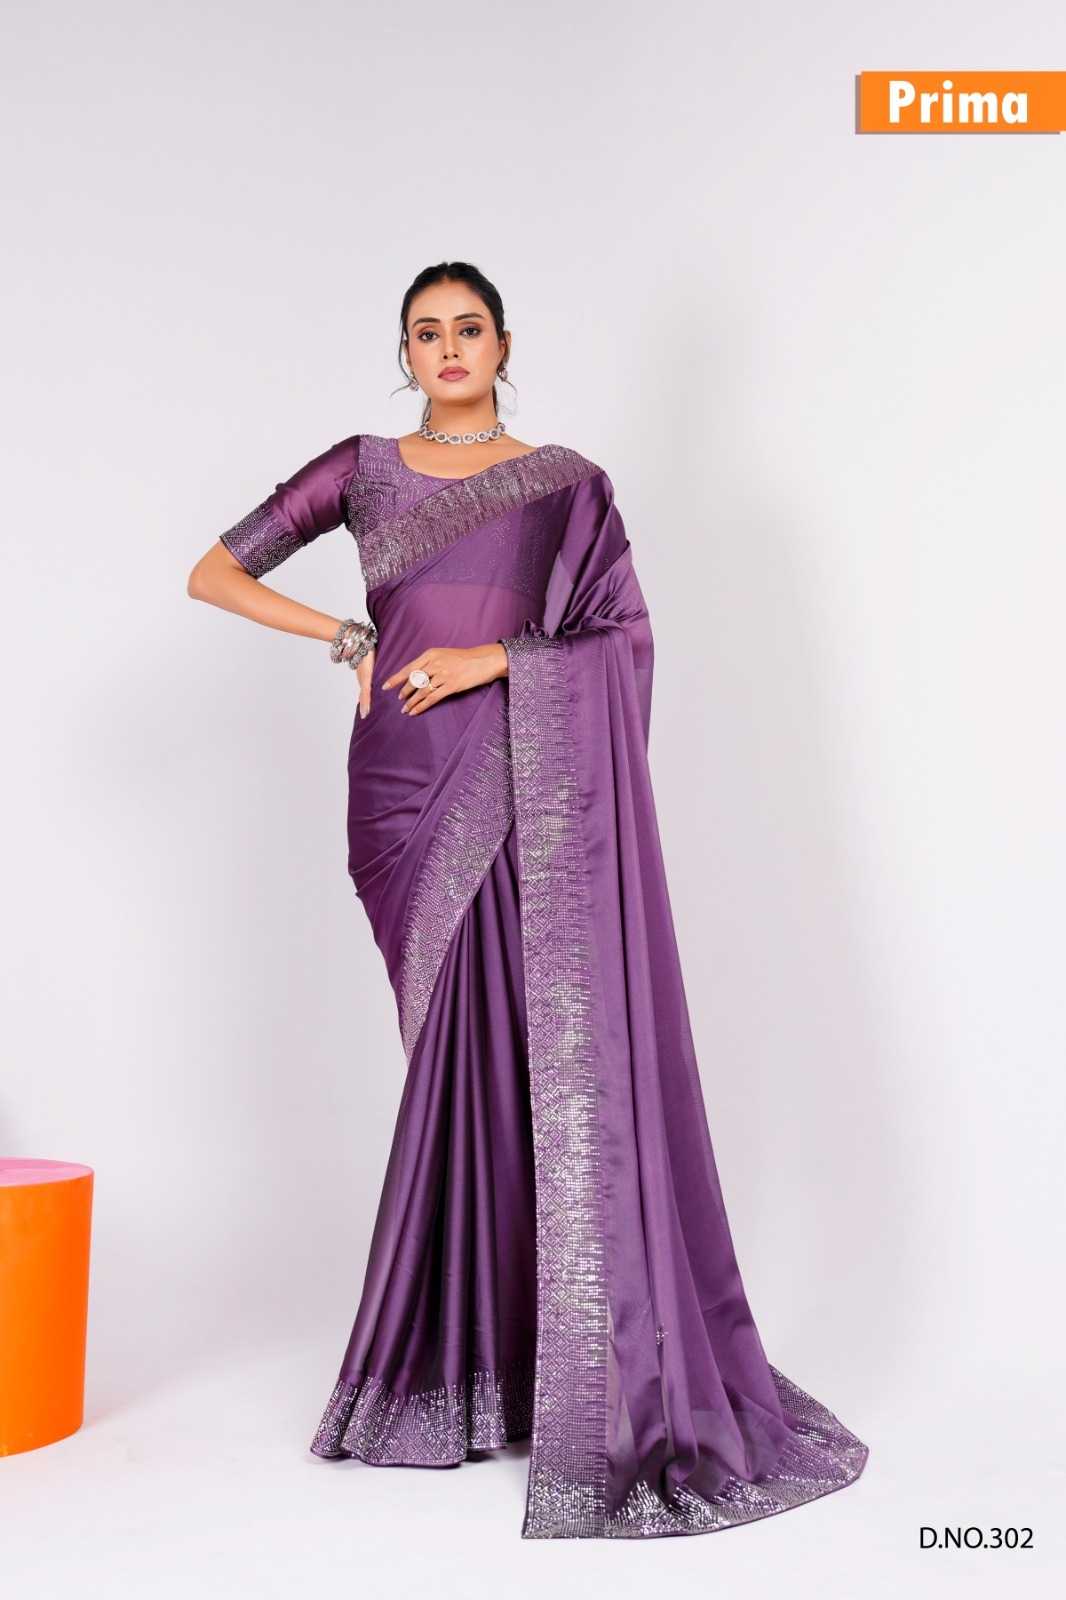 prima 301-305 black rangoli stylish preety look saree supplier 